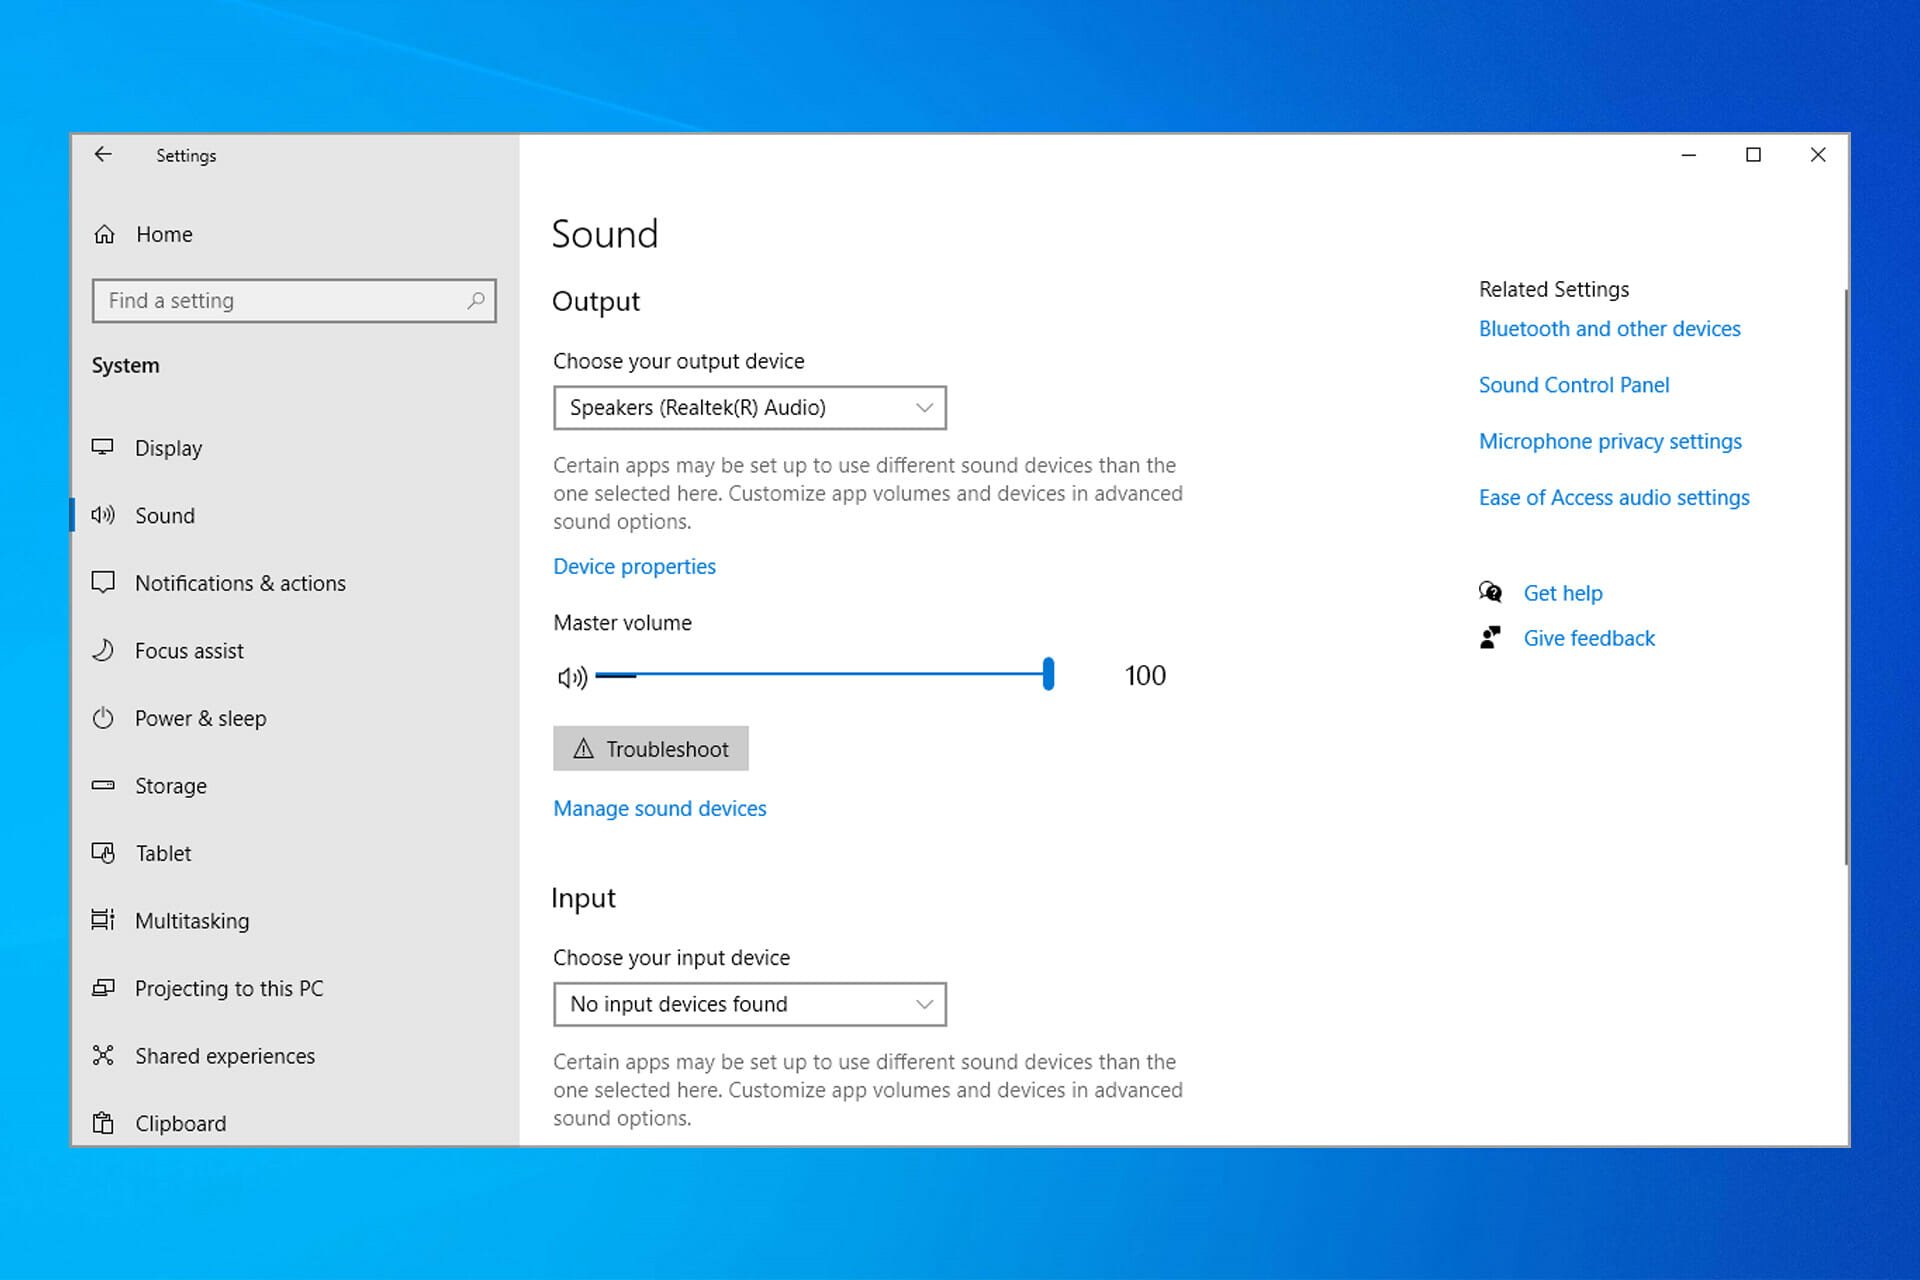 Korjaa staattinen Ã¤Ã¤ni Windows 10:ssÃ¤ pysyvÃ¤sti kuudessa helpossa vaiheessa